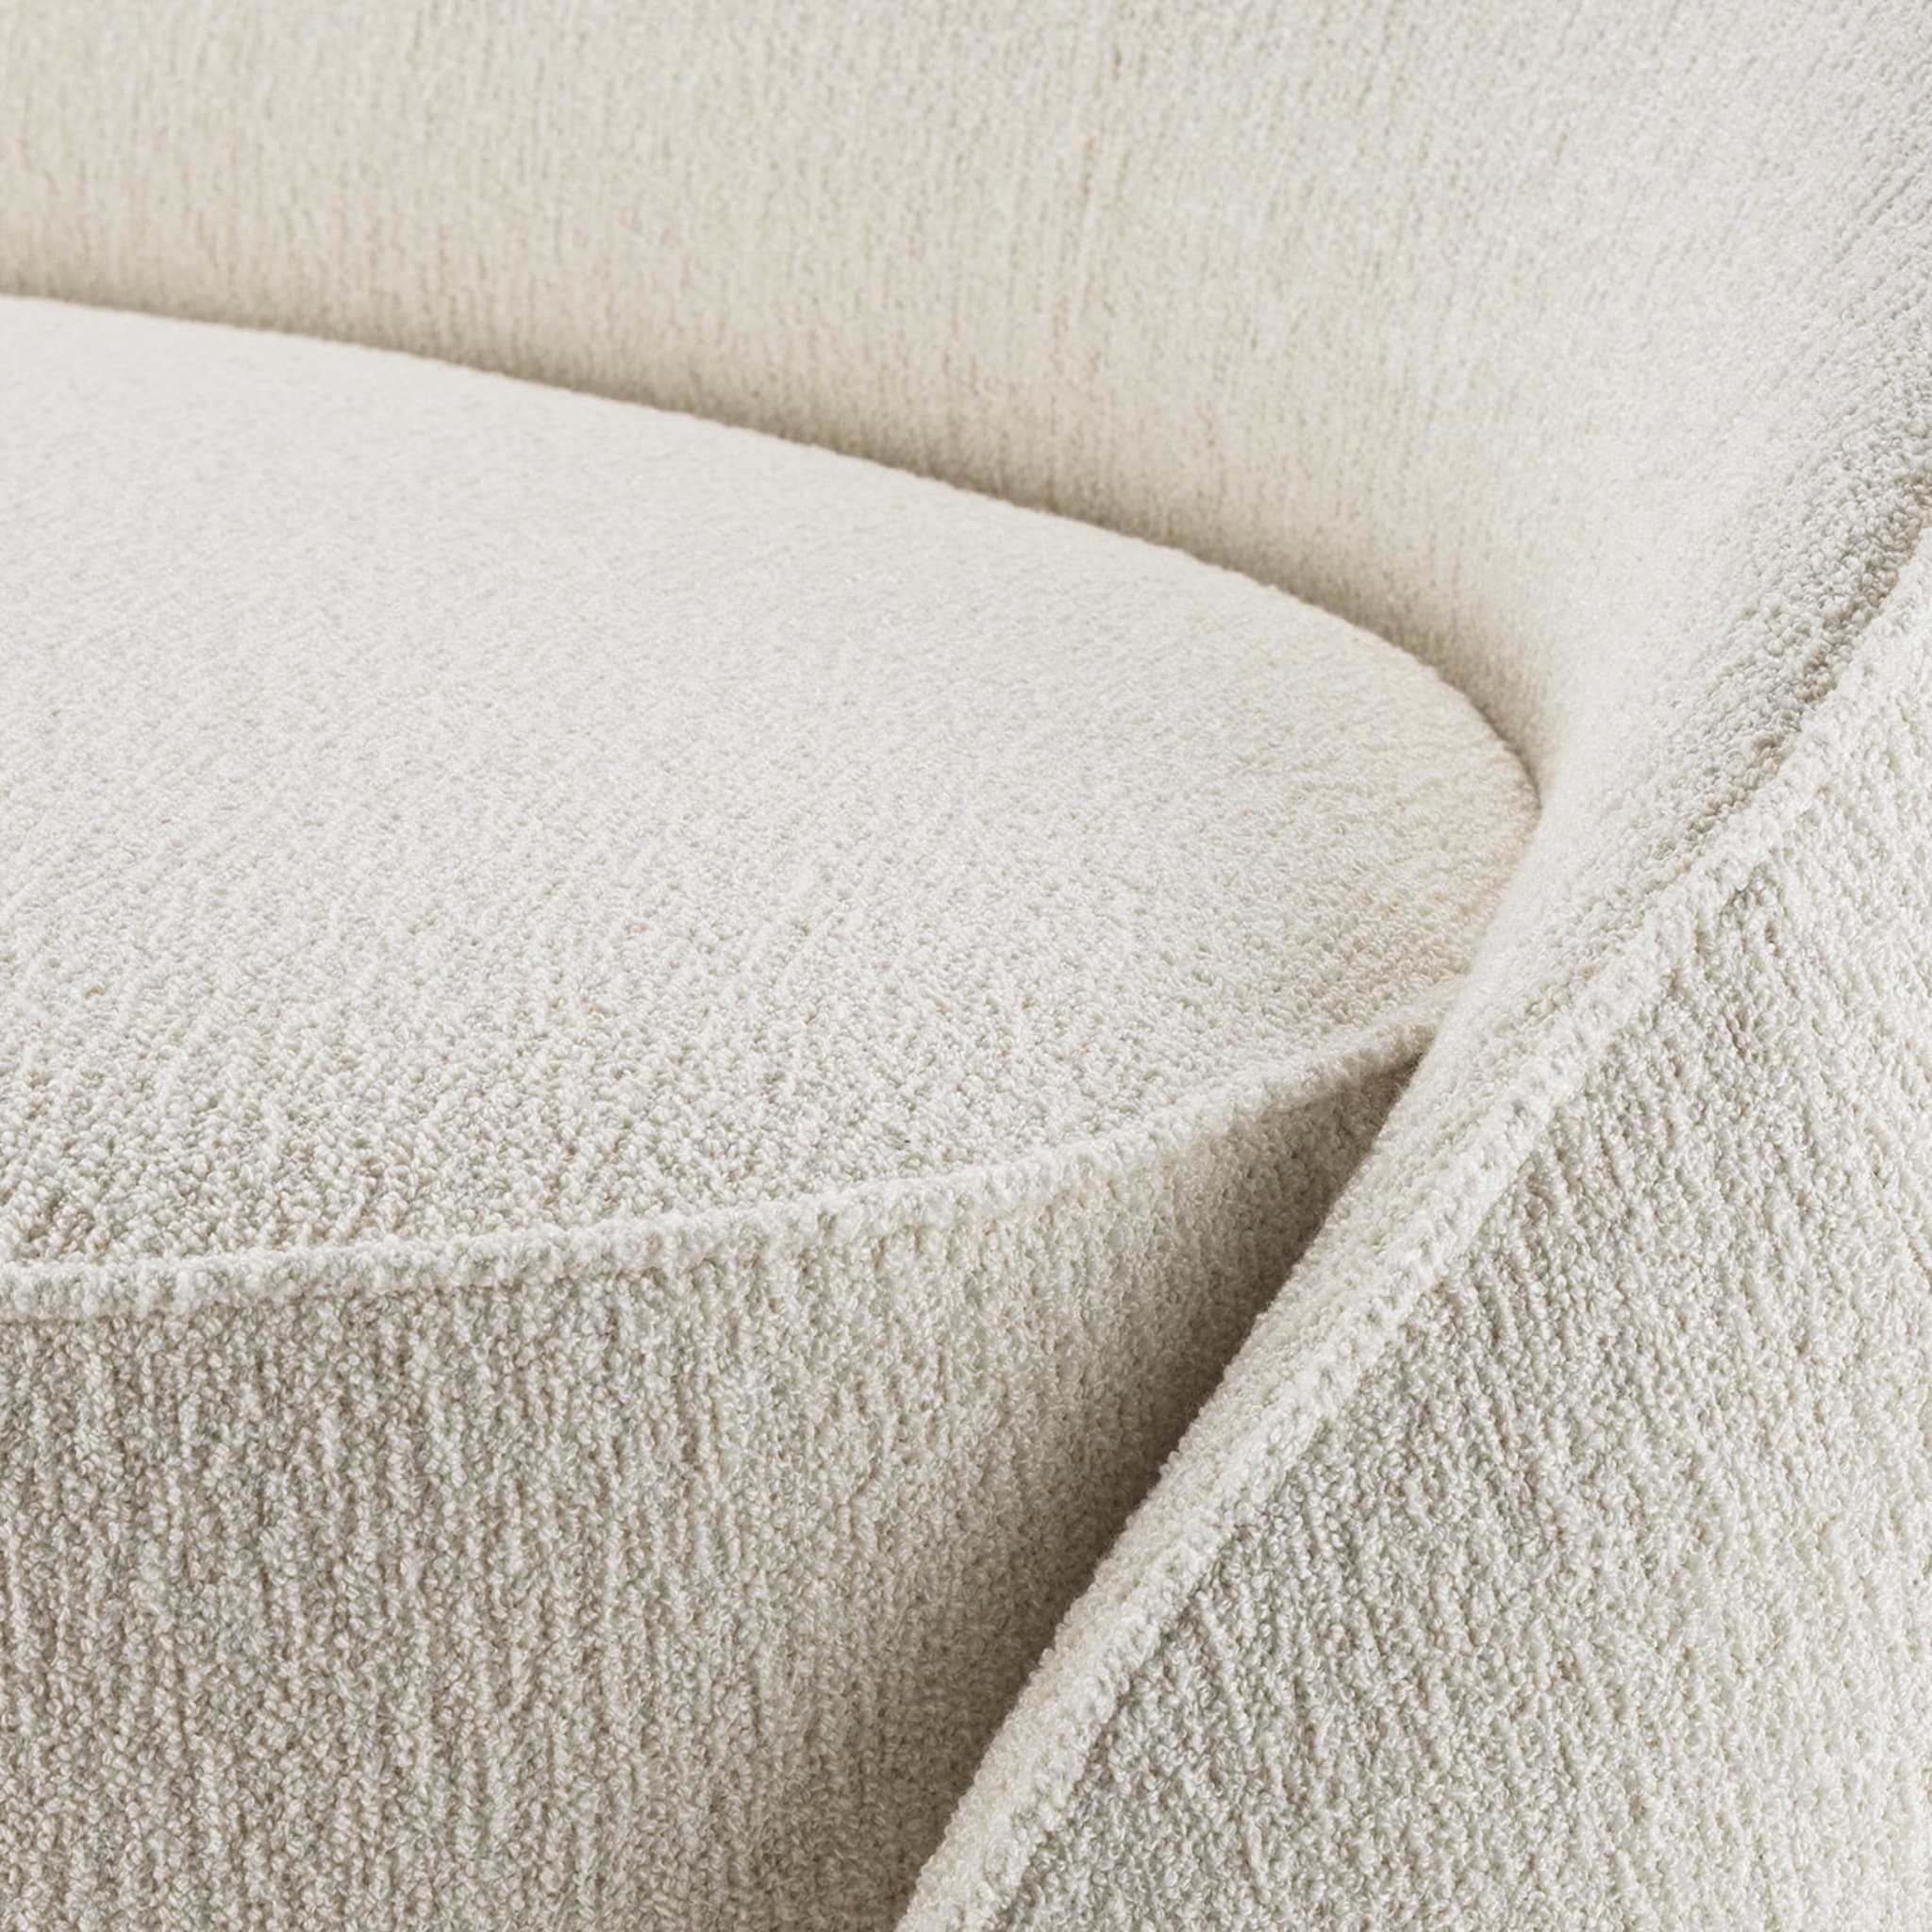 Abbracci 3-Module White Sofa by Lorenza Bozzoli - Alternative view 2